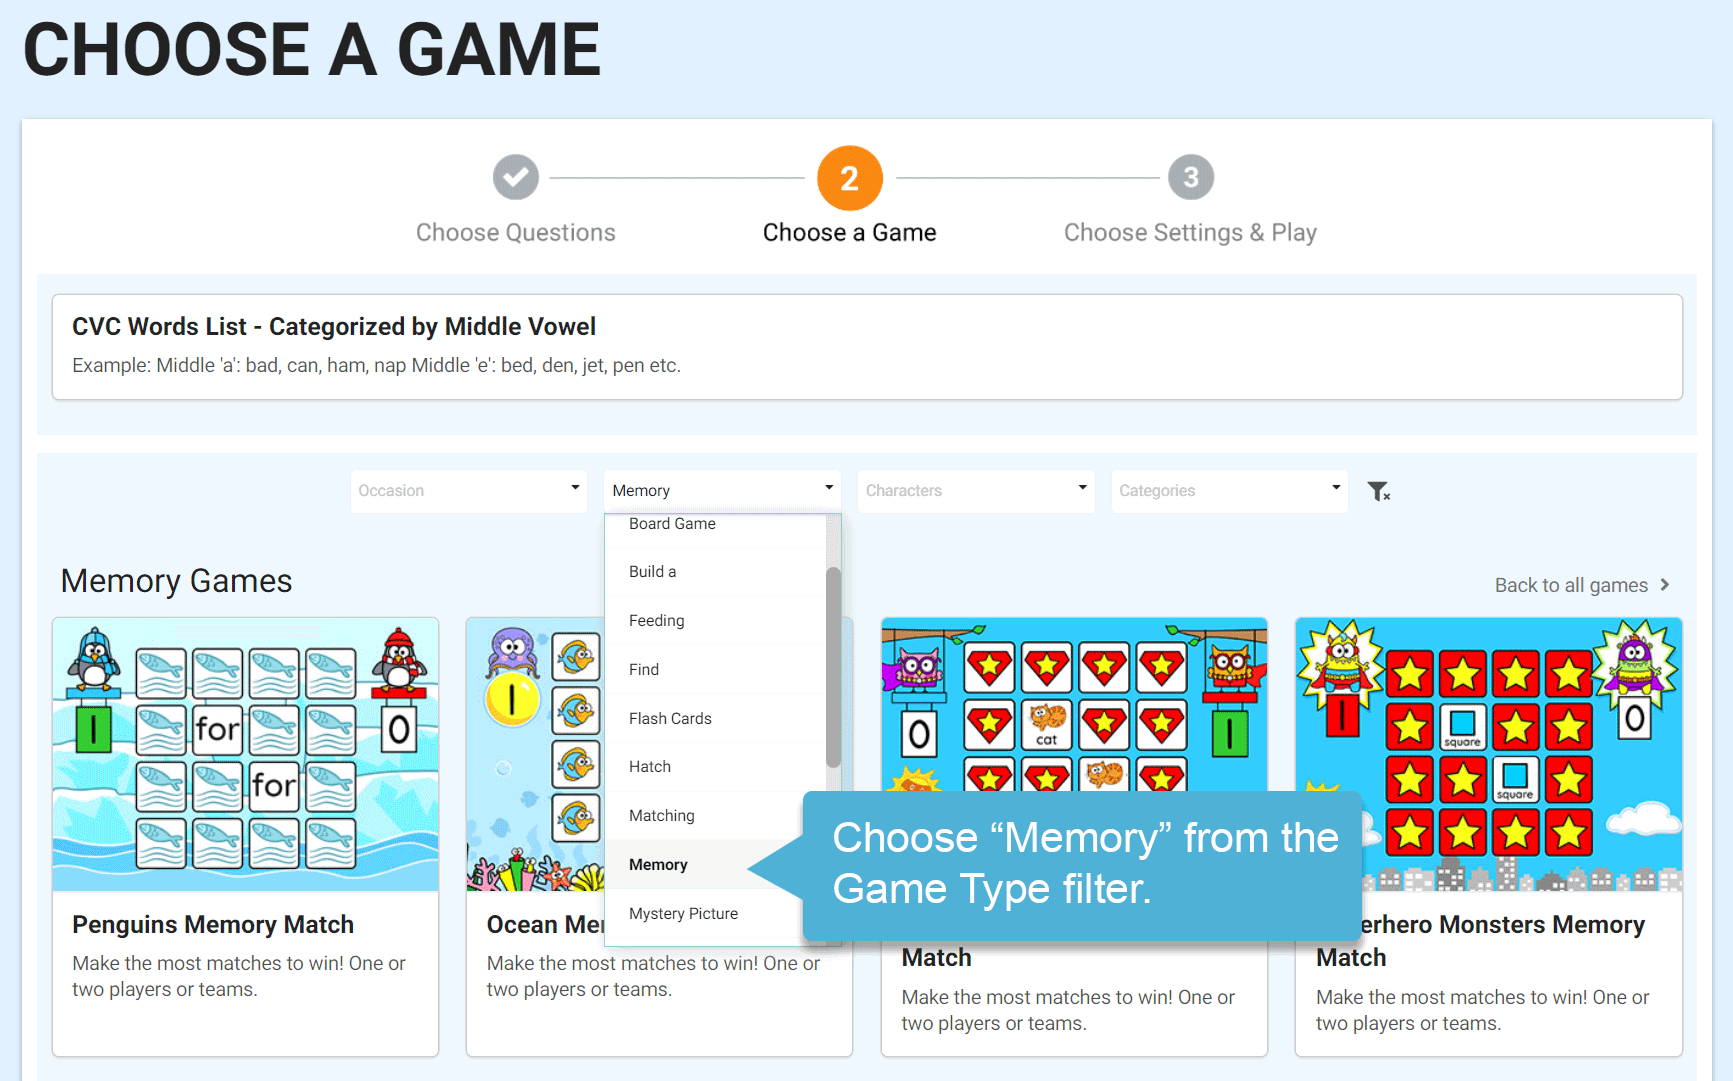 choose-a-game-game-type-memory.gif